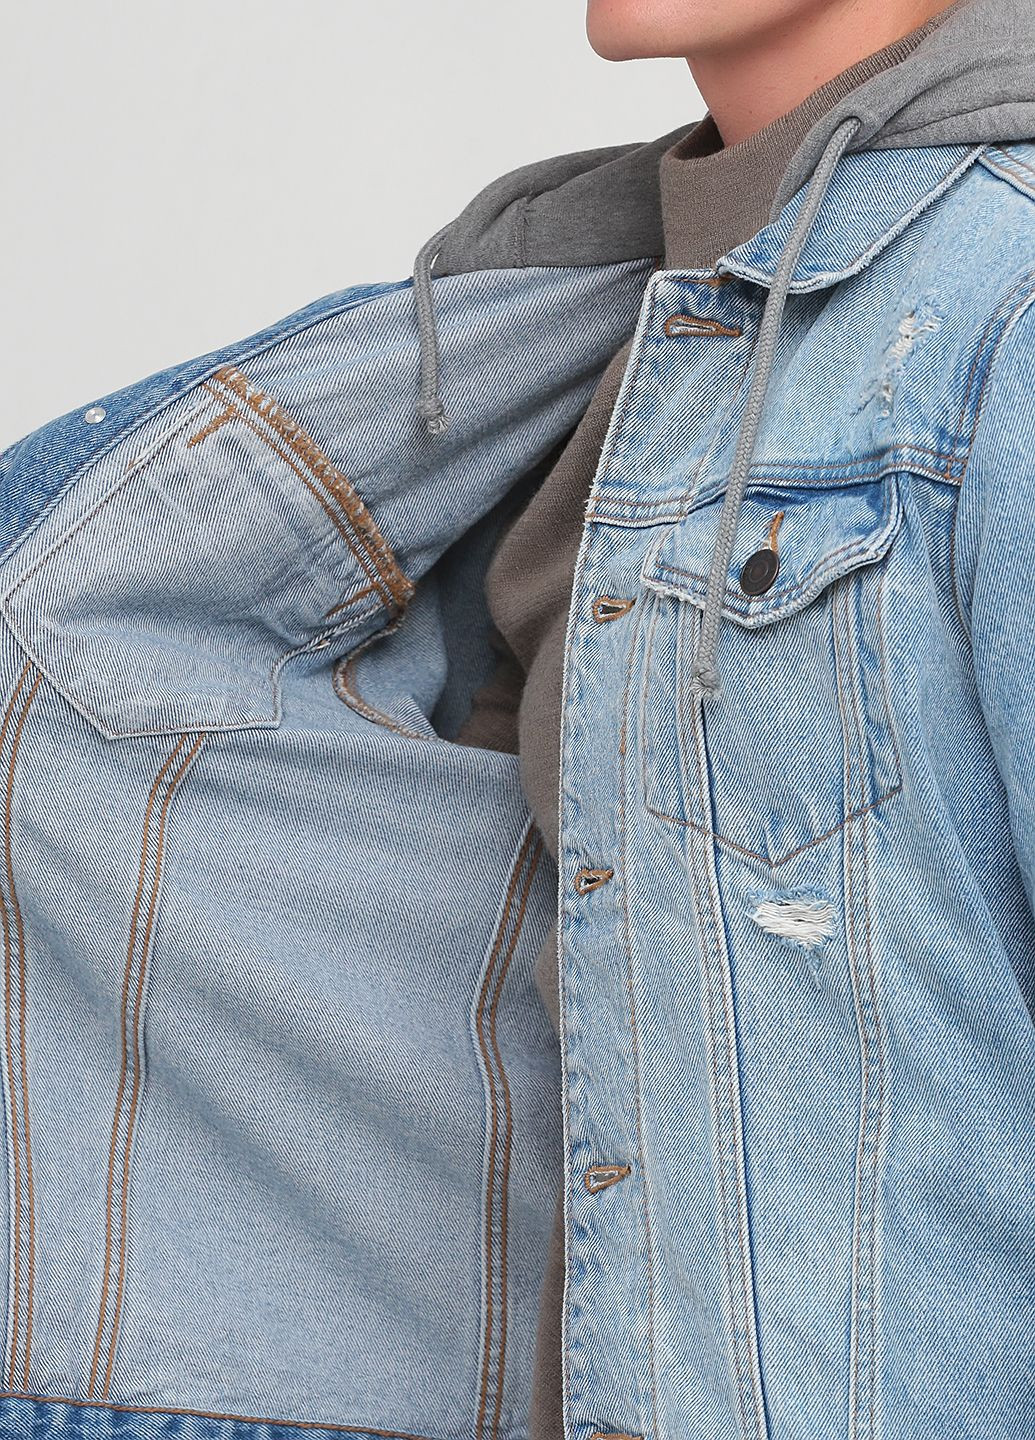 Блакитна демісезонна джинсова куртка af8134 Abercrombie & Fitch